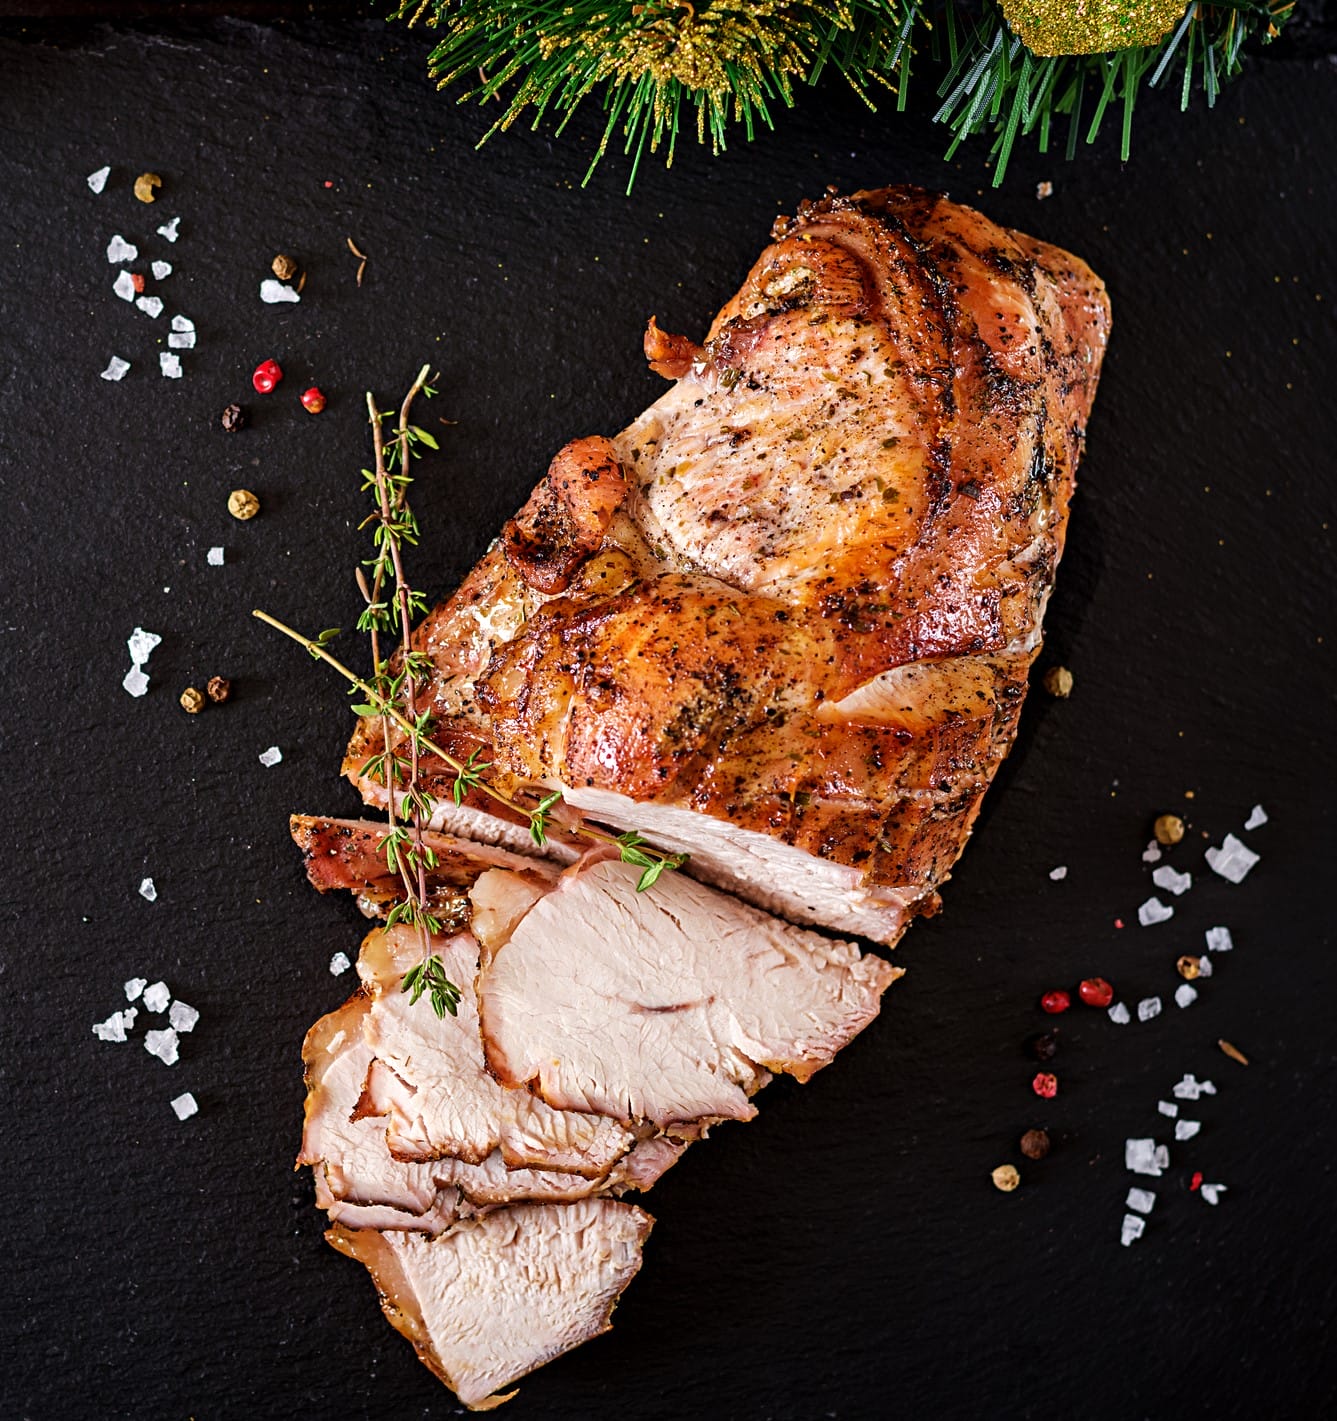 Roasted sliced Christmas turkey on dark rustic background. Top view. Festival food.